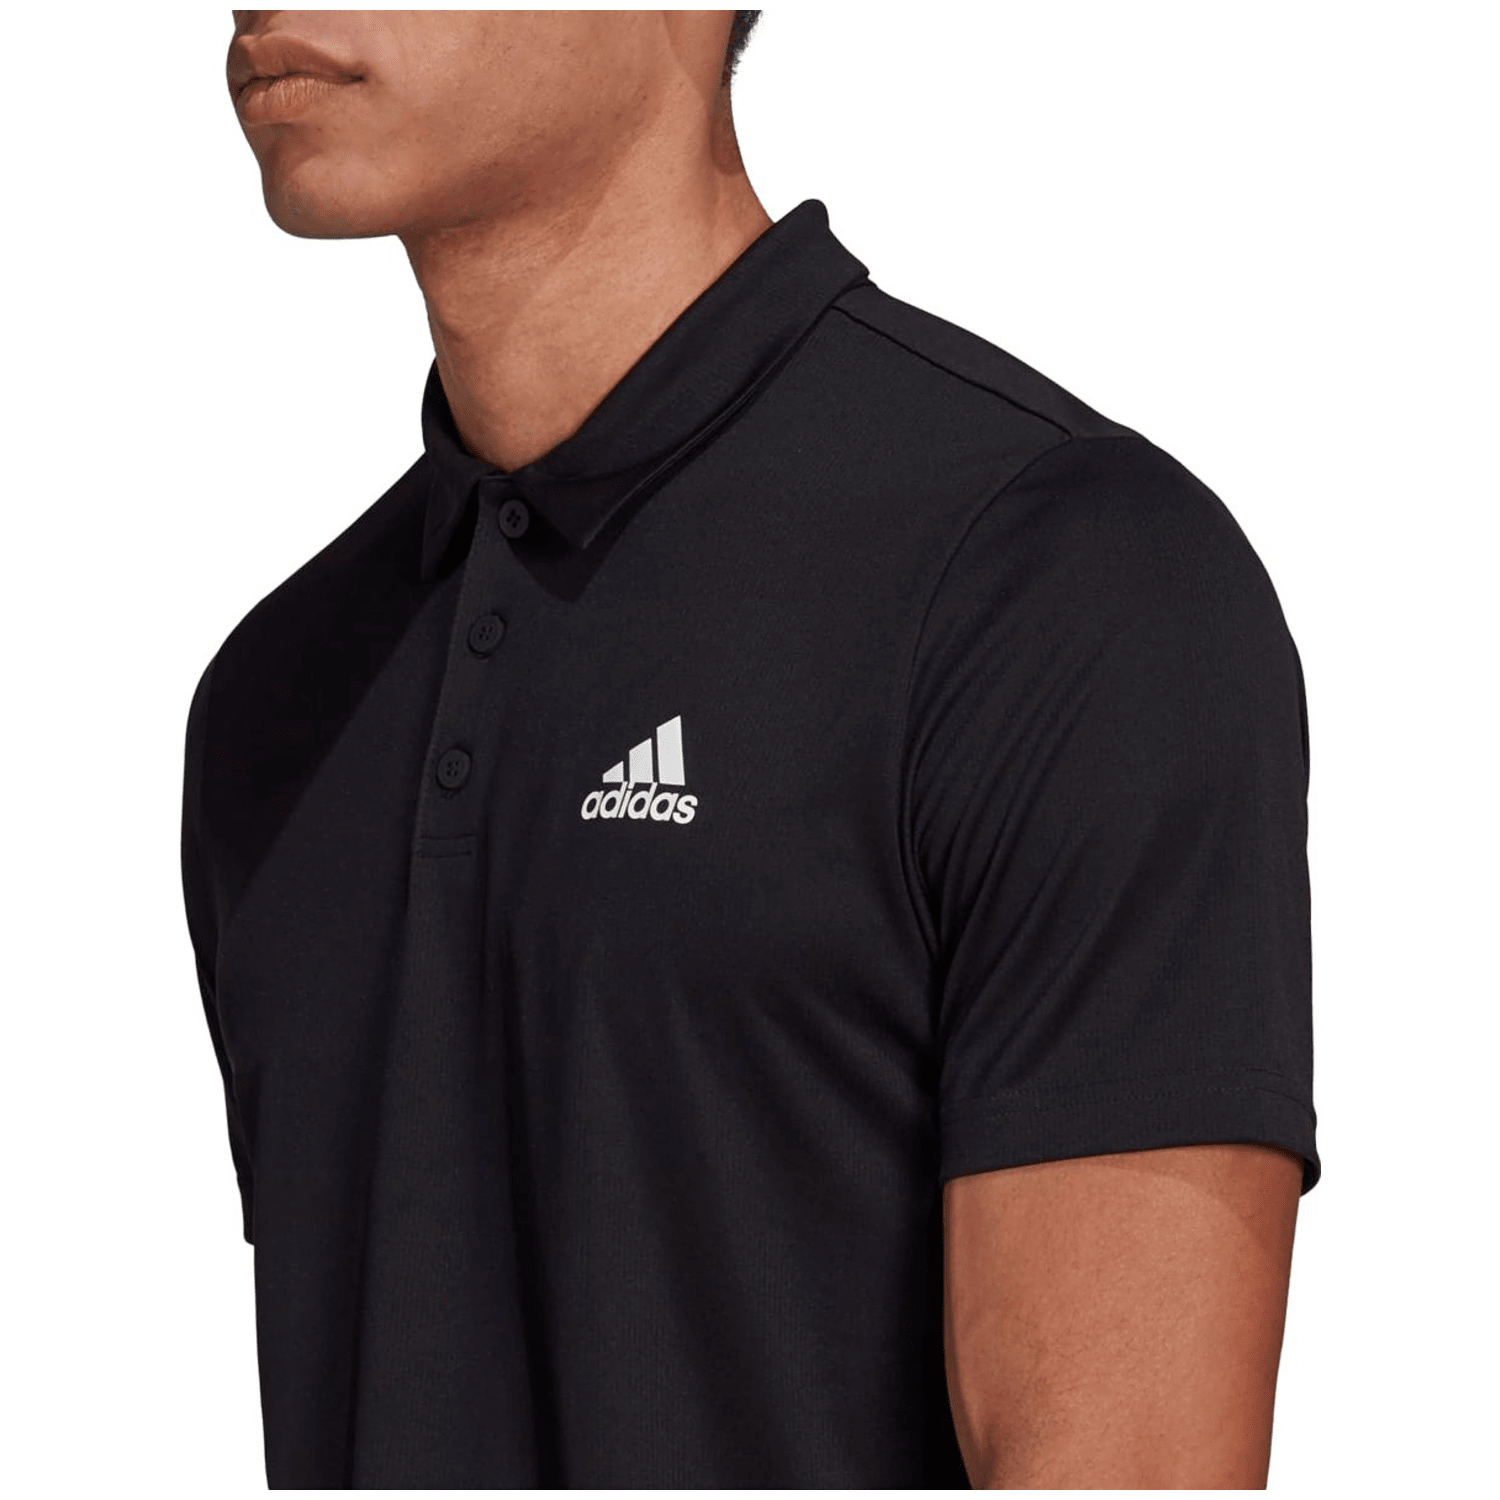 Adidas AEROREADY Designed To Move Sport Poloshirt Herren